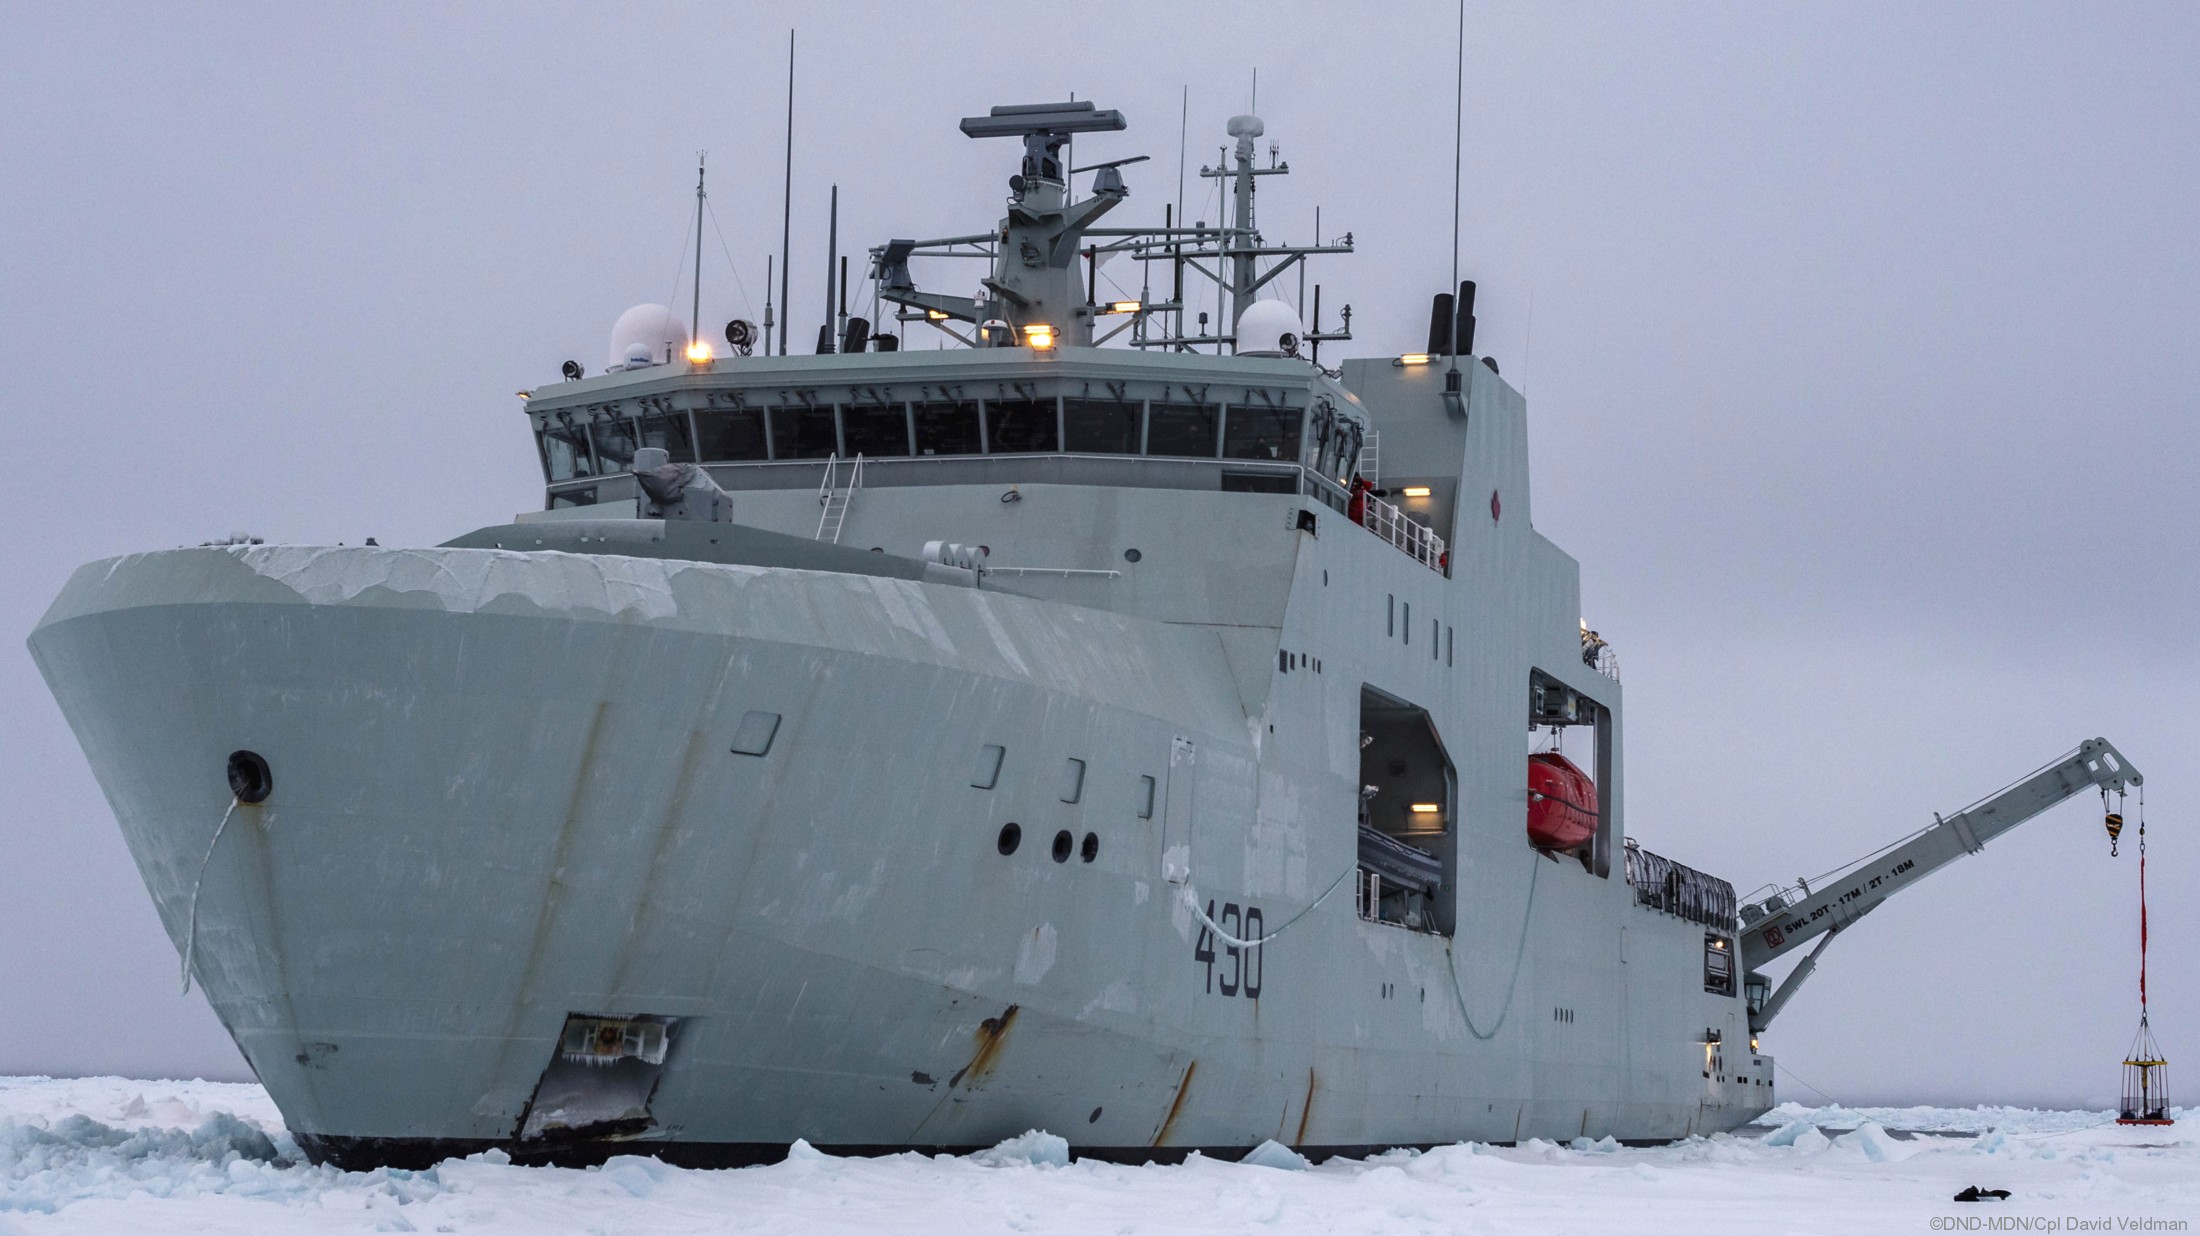 aopv-430 hmcs harry dewolf arctic offshore patrol vessel ncsm royal canadian navy 09